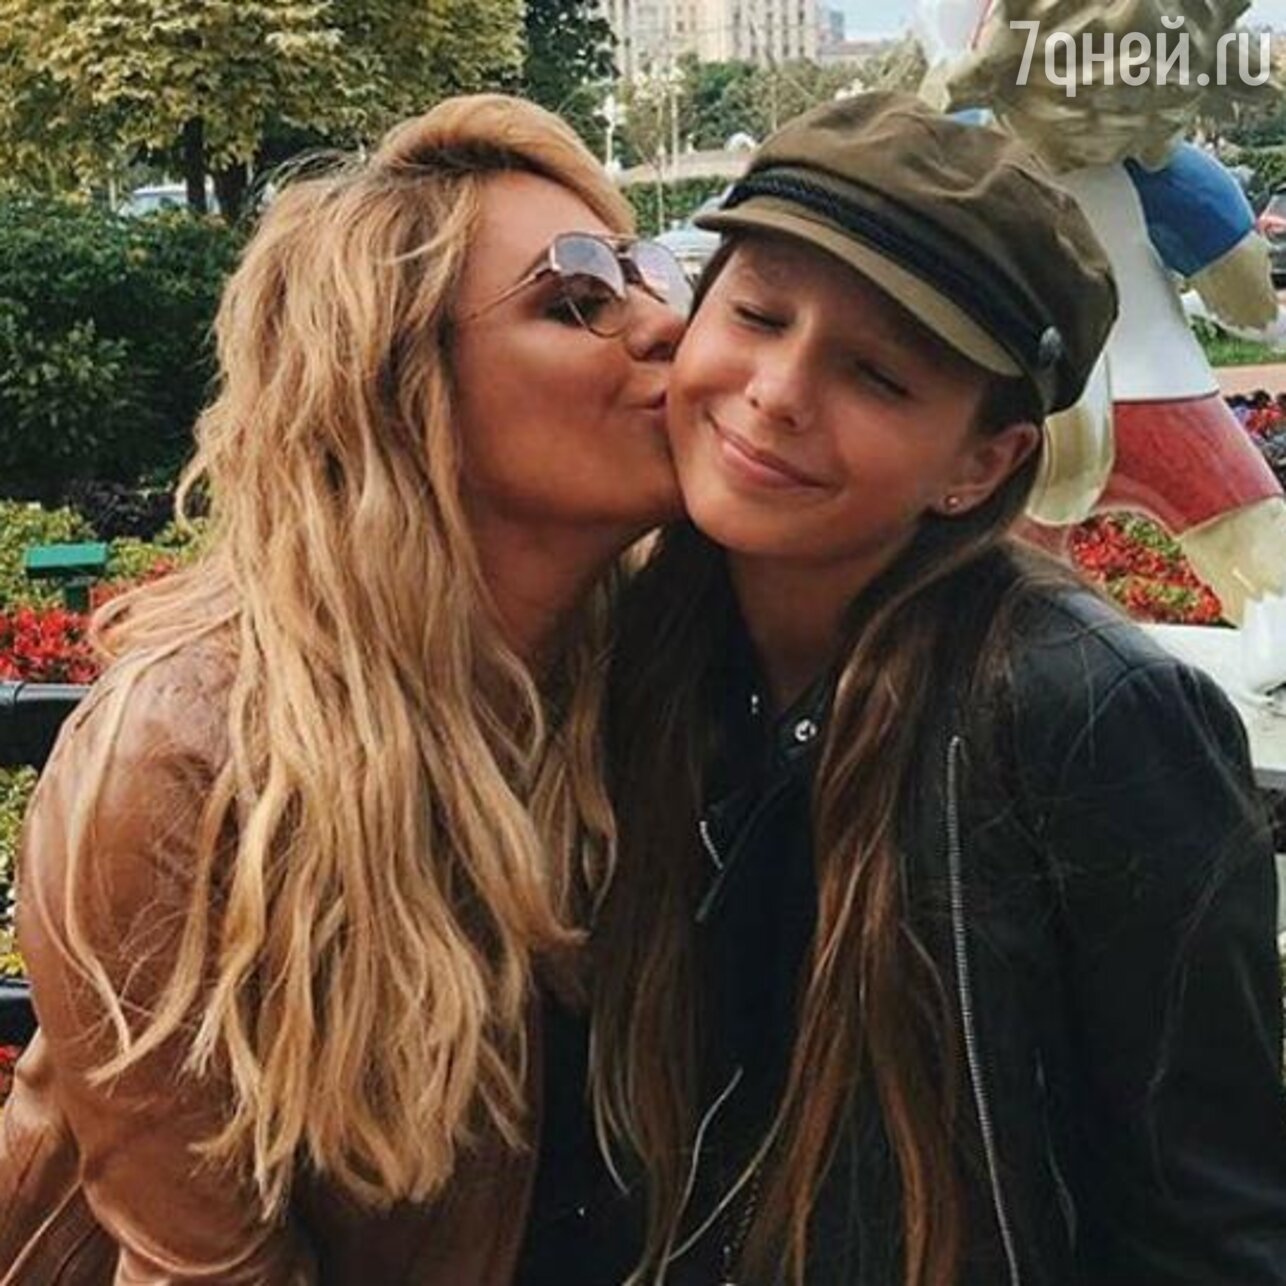 Юлия Началова с дочкой